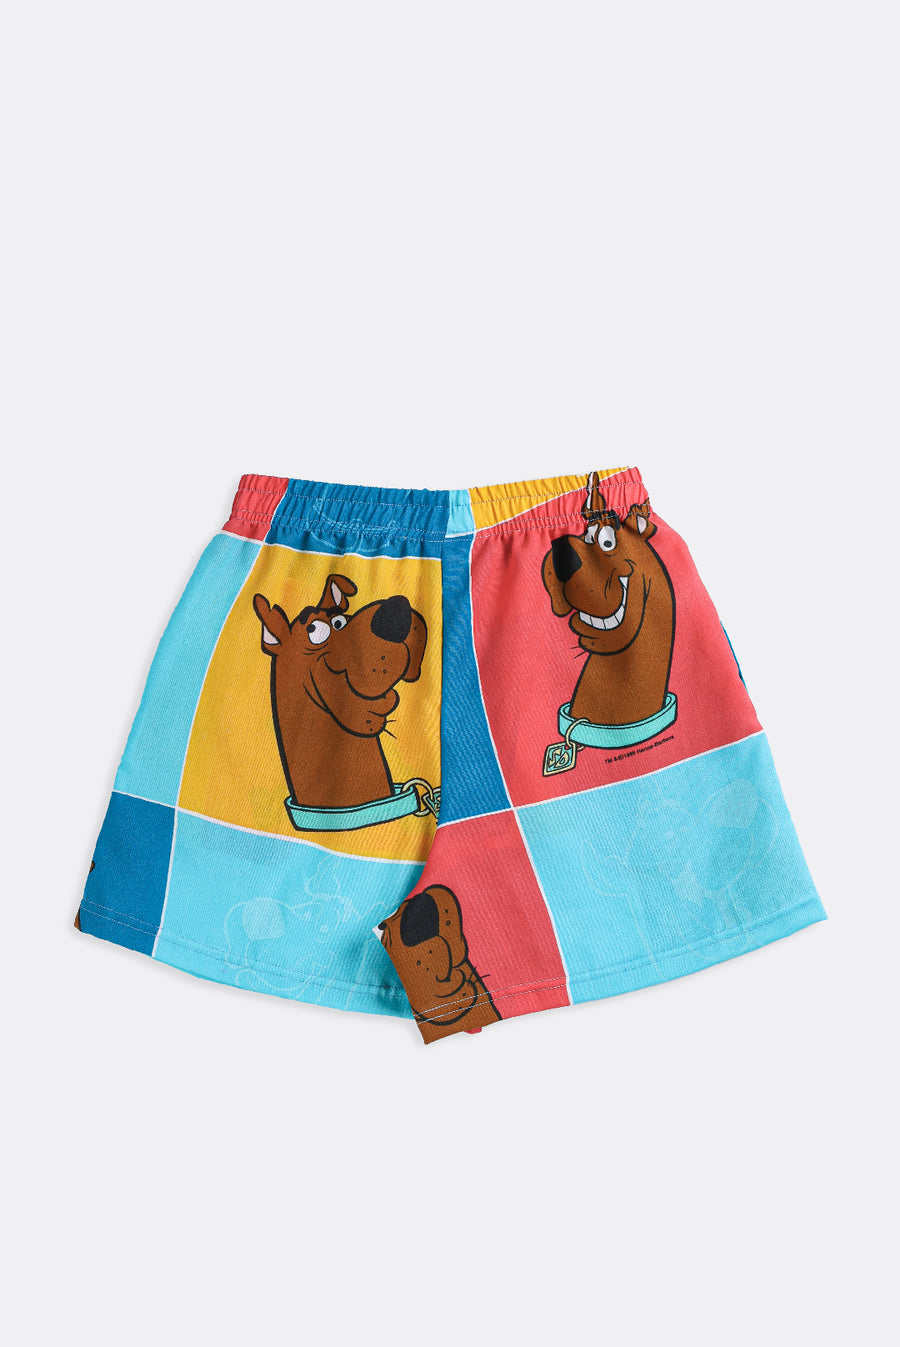 Unisex Rework Scooby Doo Boxer Shorts - XS, S